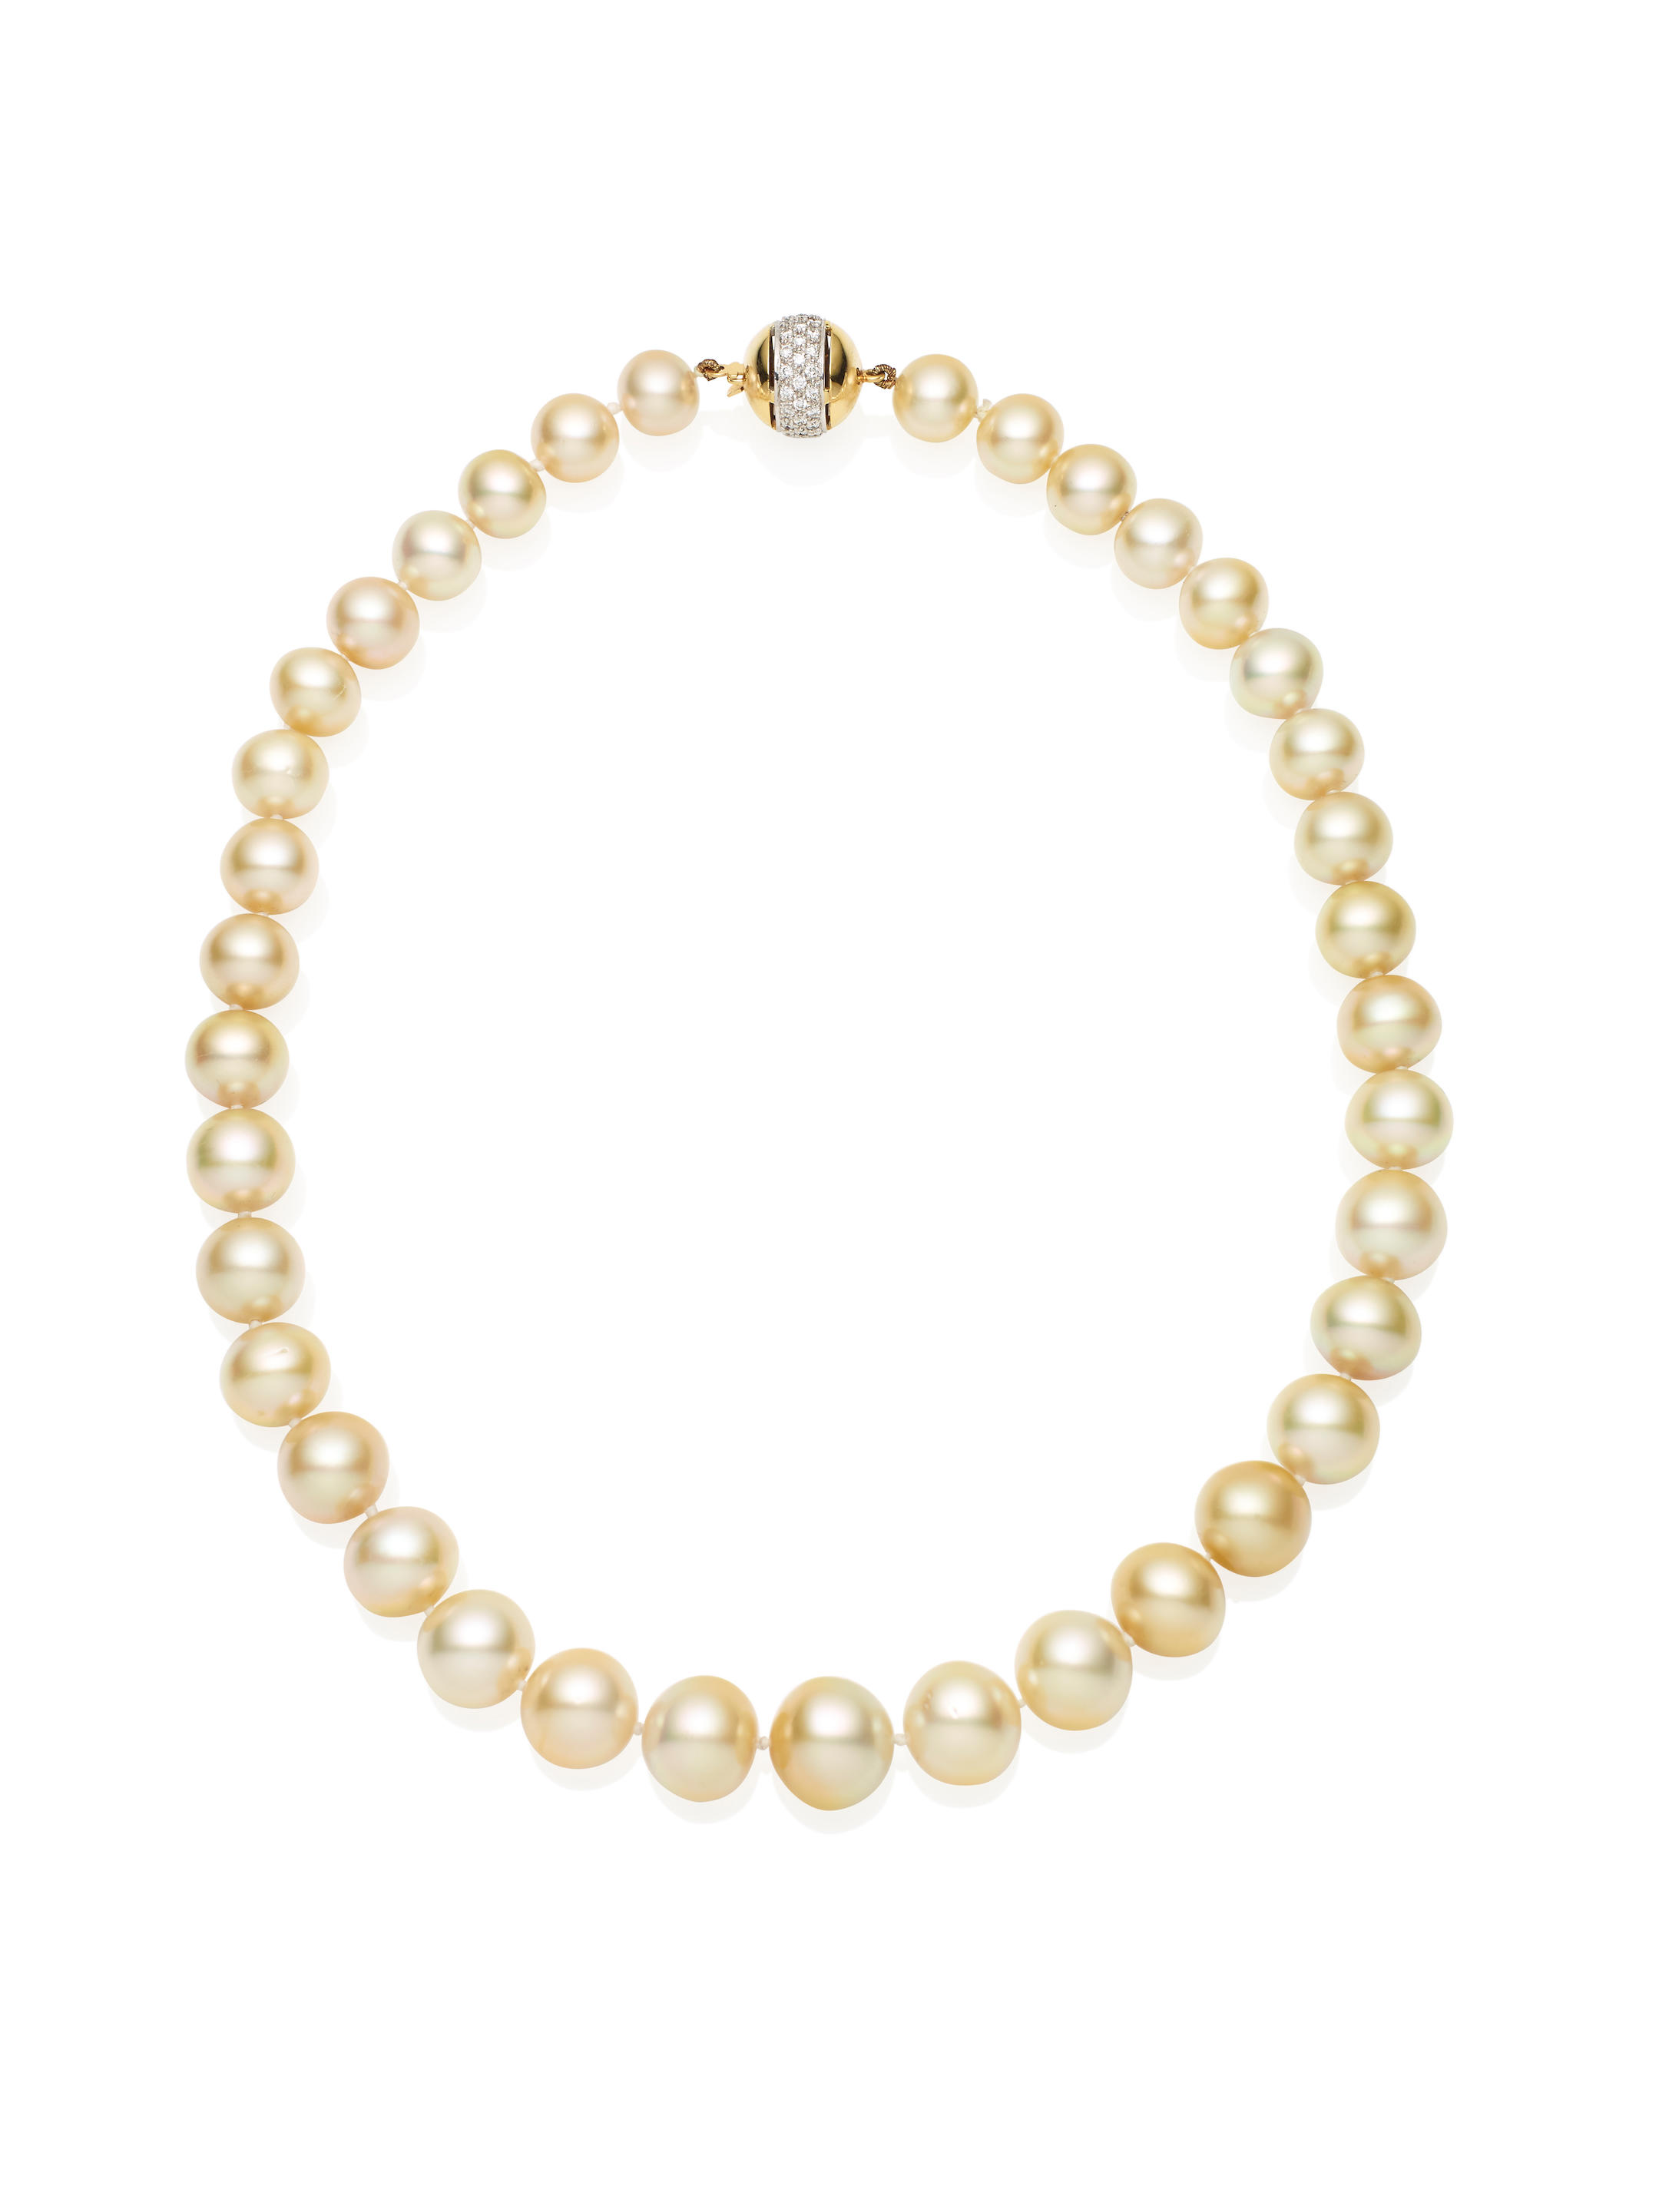 Bonhams : A cultured pearl necklace